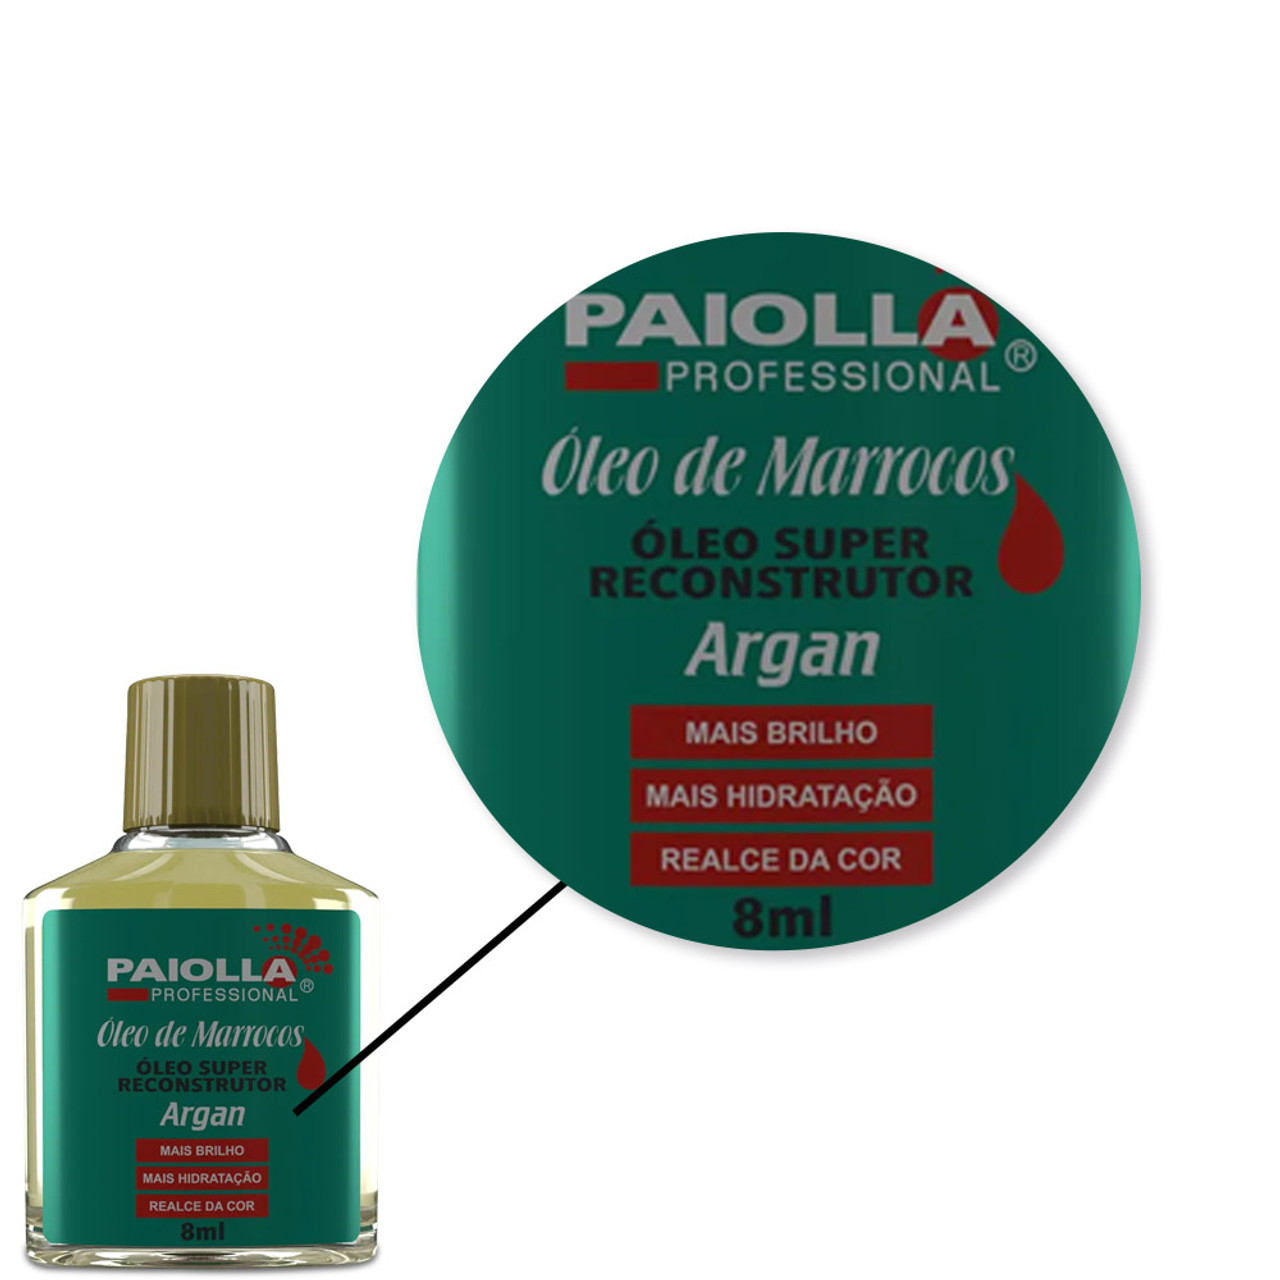 Lola Cosmetics Argan Oil Vegan Damaged Hair Óleo Argan Treatment Hair Care  50ml/1.69fl.oz